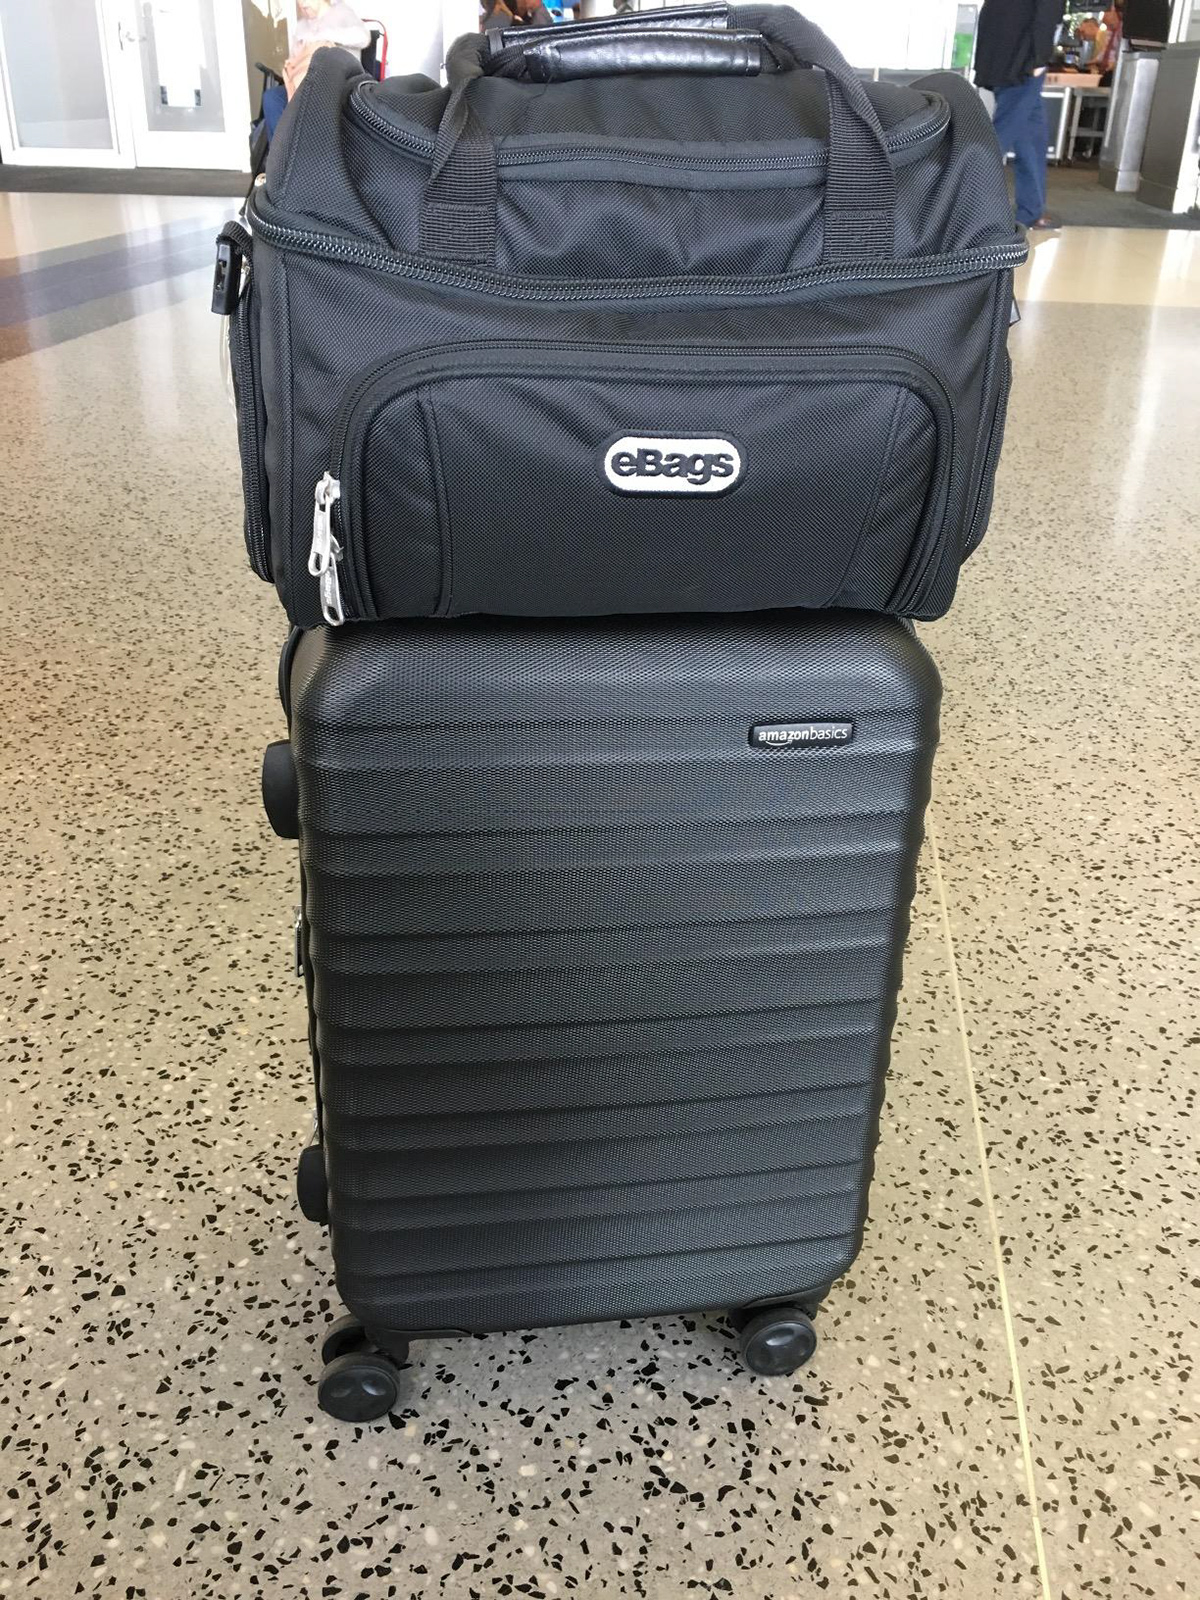 carry-on luggage luggage